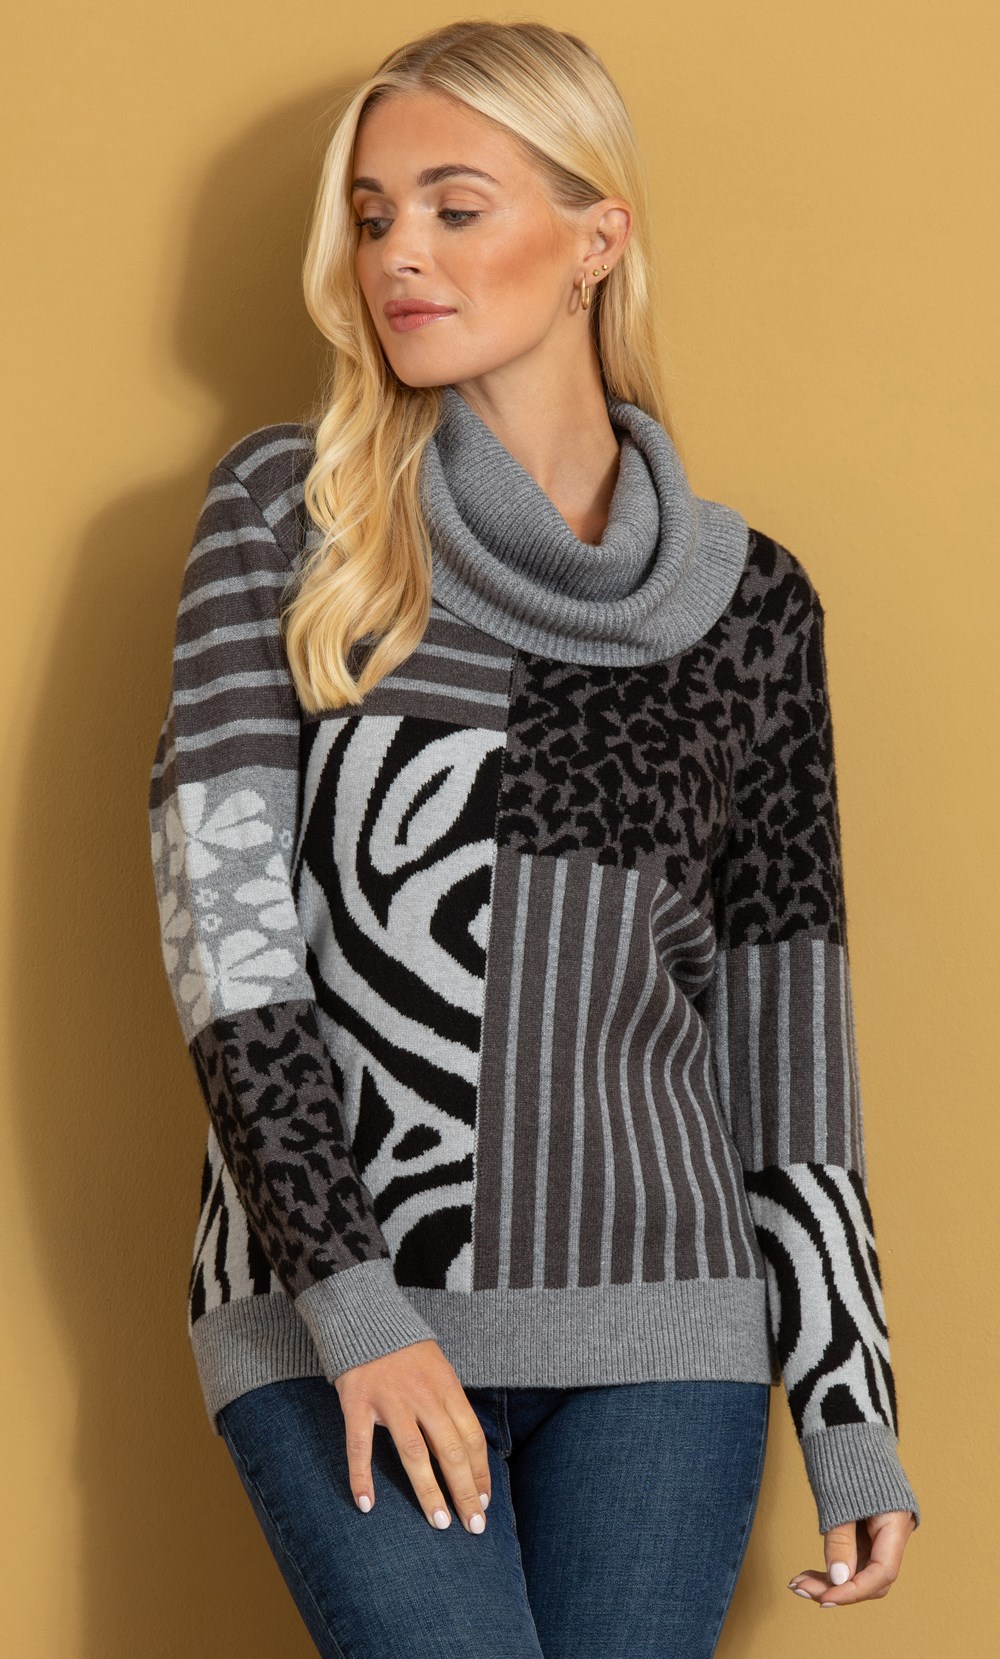 Brands - Klass Patchwork Knitted Top Black/Grey Women’s